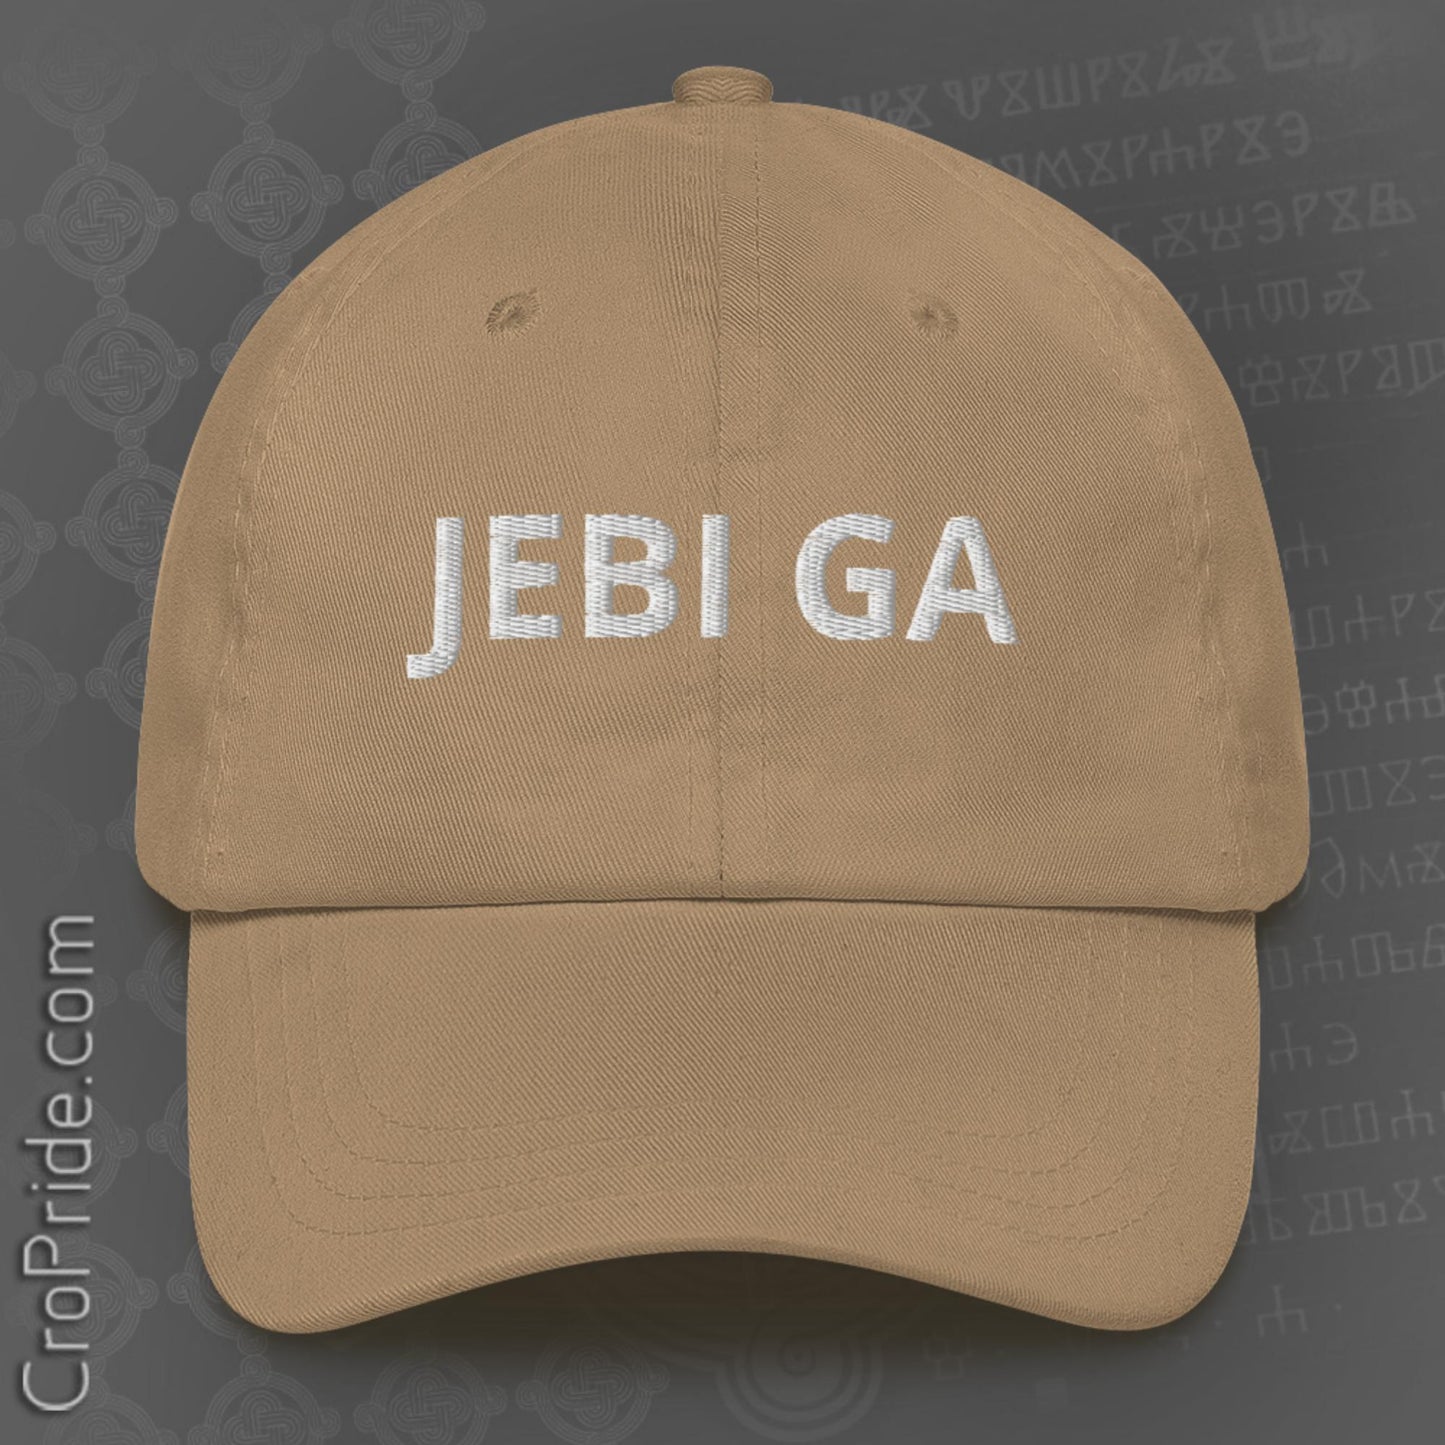 CroPride Gear "Jebi Ga" Hat - Make a Bold Statement